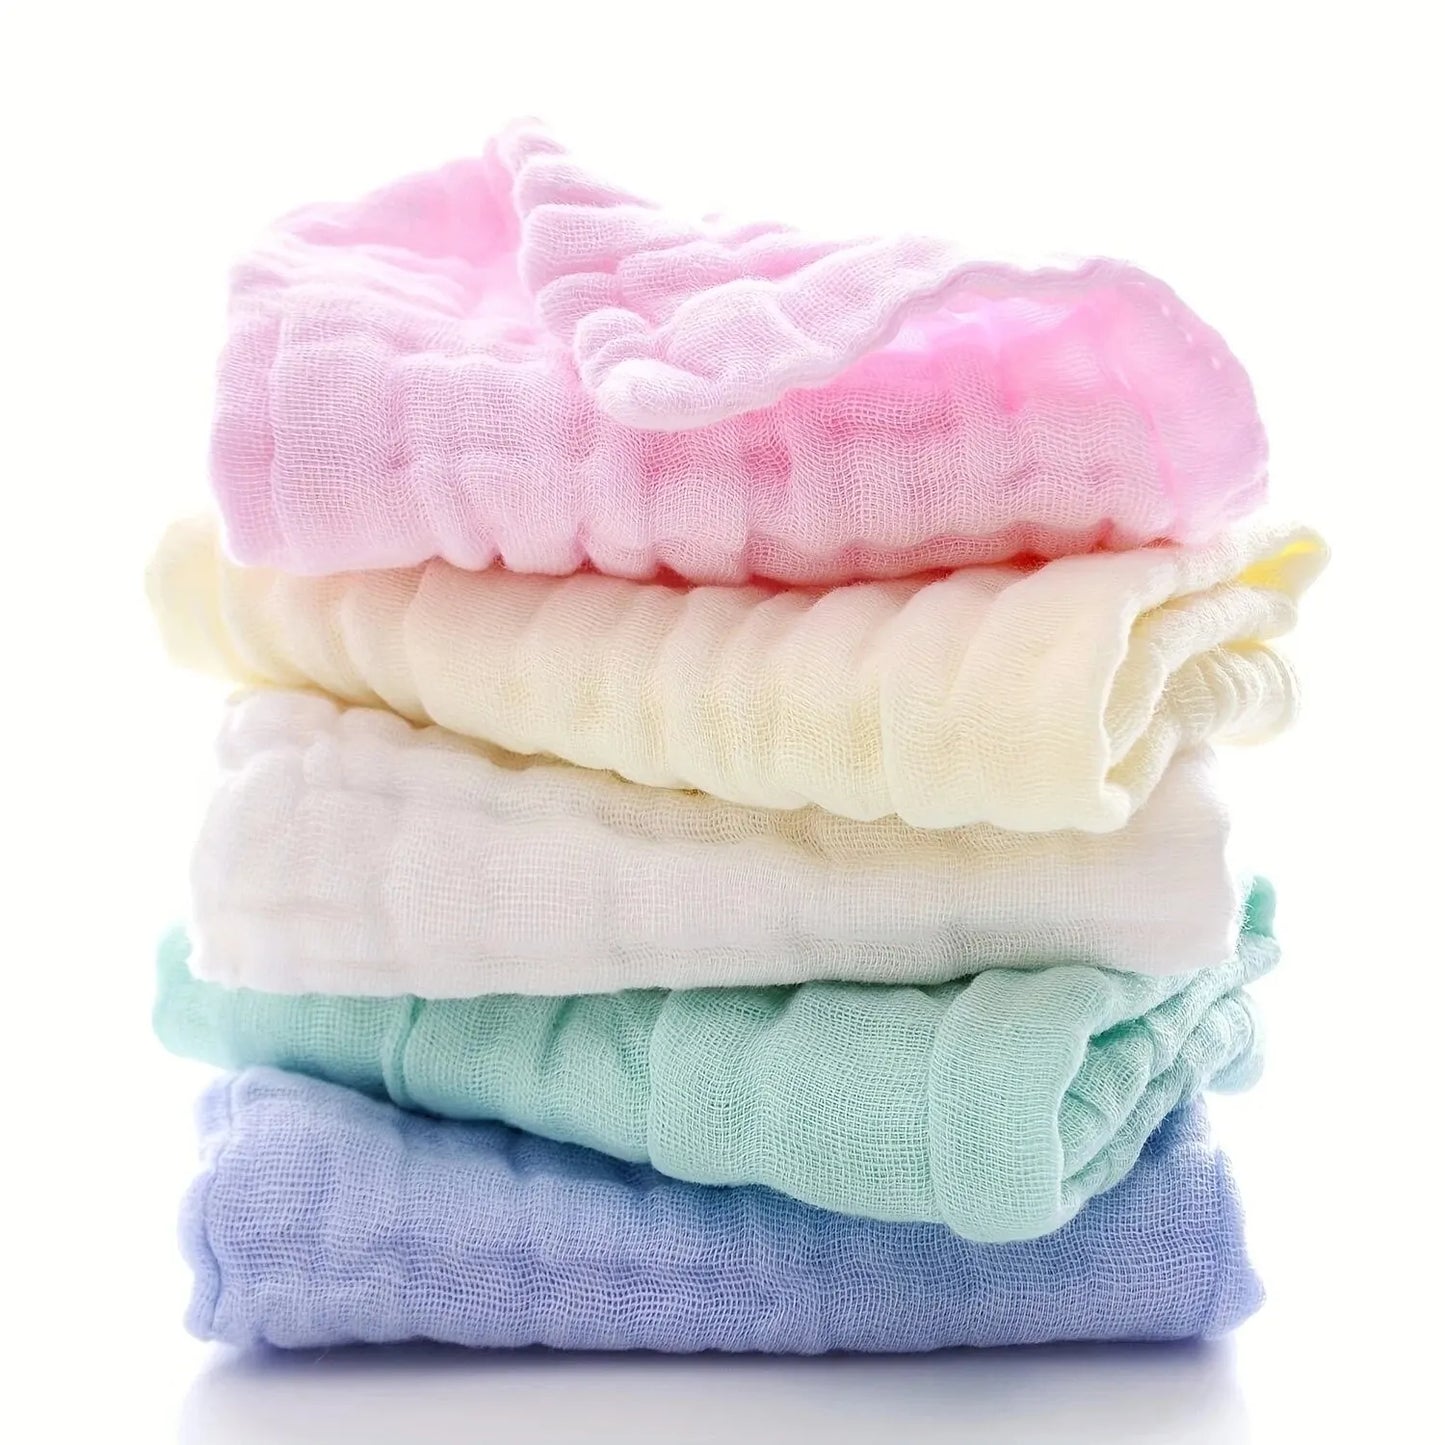 Baby Muslin Washcloths Soft Newborn Baby Face Towel for Sensitive Skin- Baby Registry as Shower